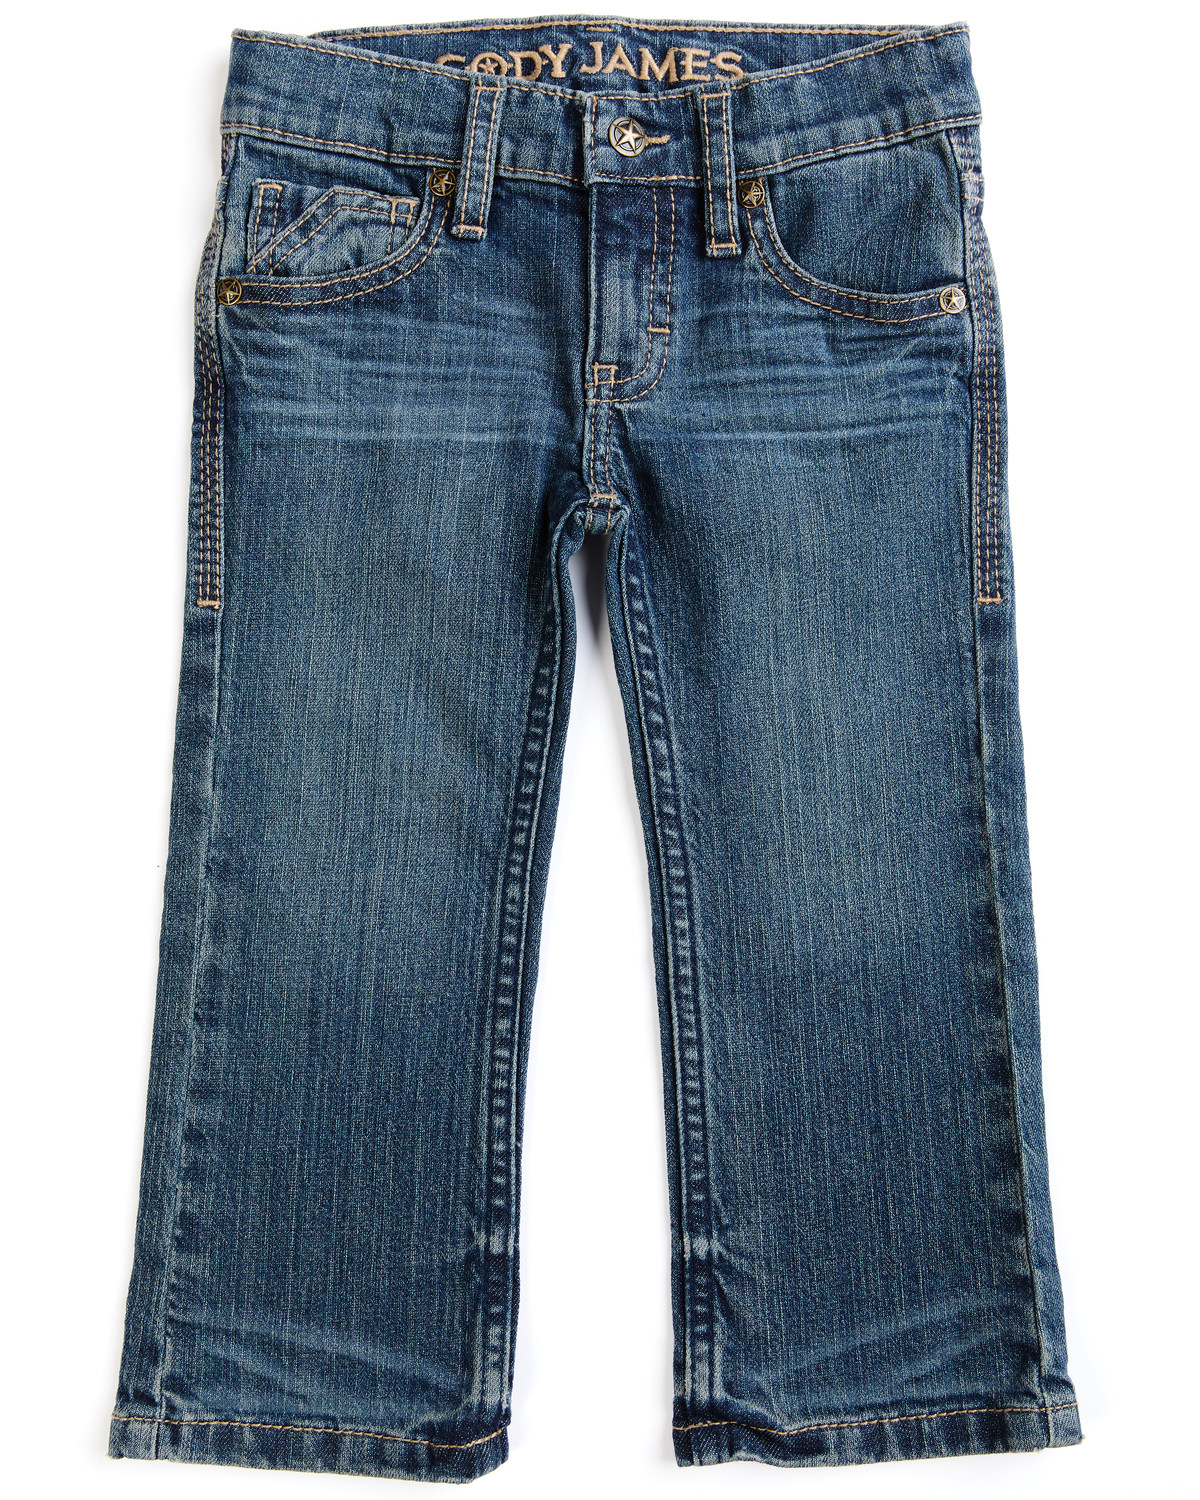 Cody James Toddler Boys' Saguaro Dark Wash Mid Rise Stretch Slim Bootcut Jeans